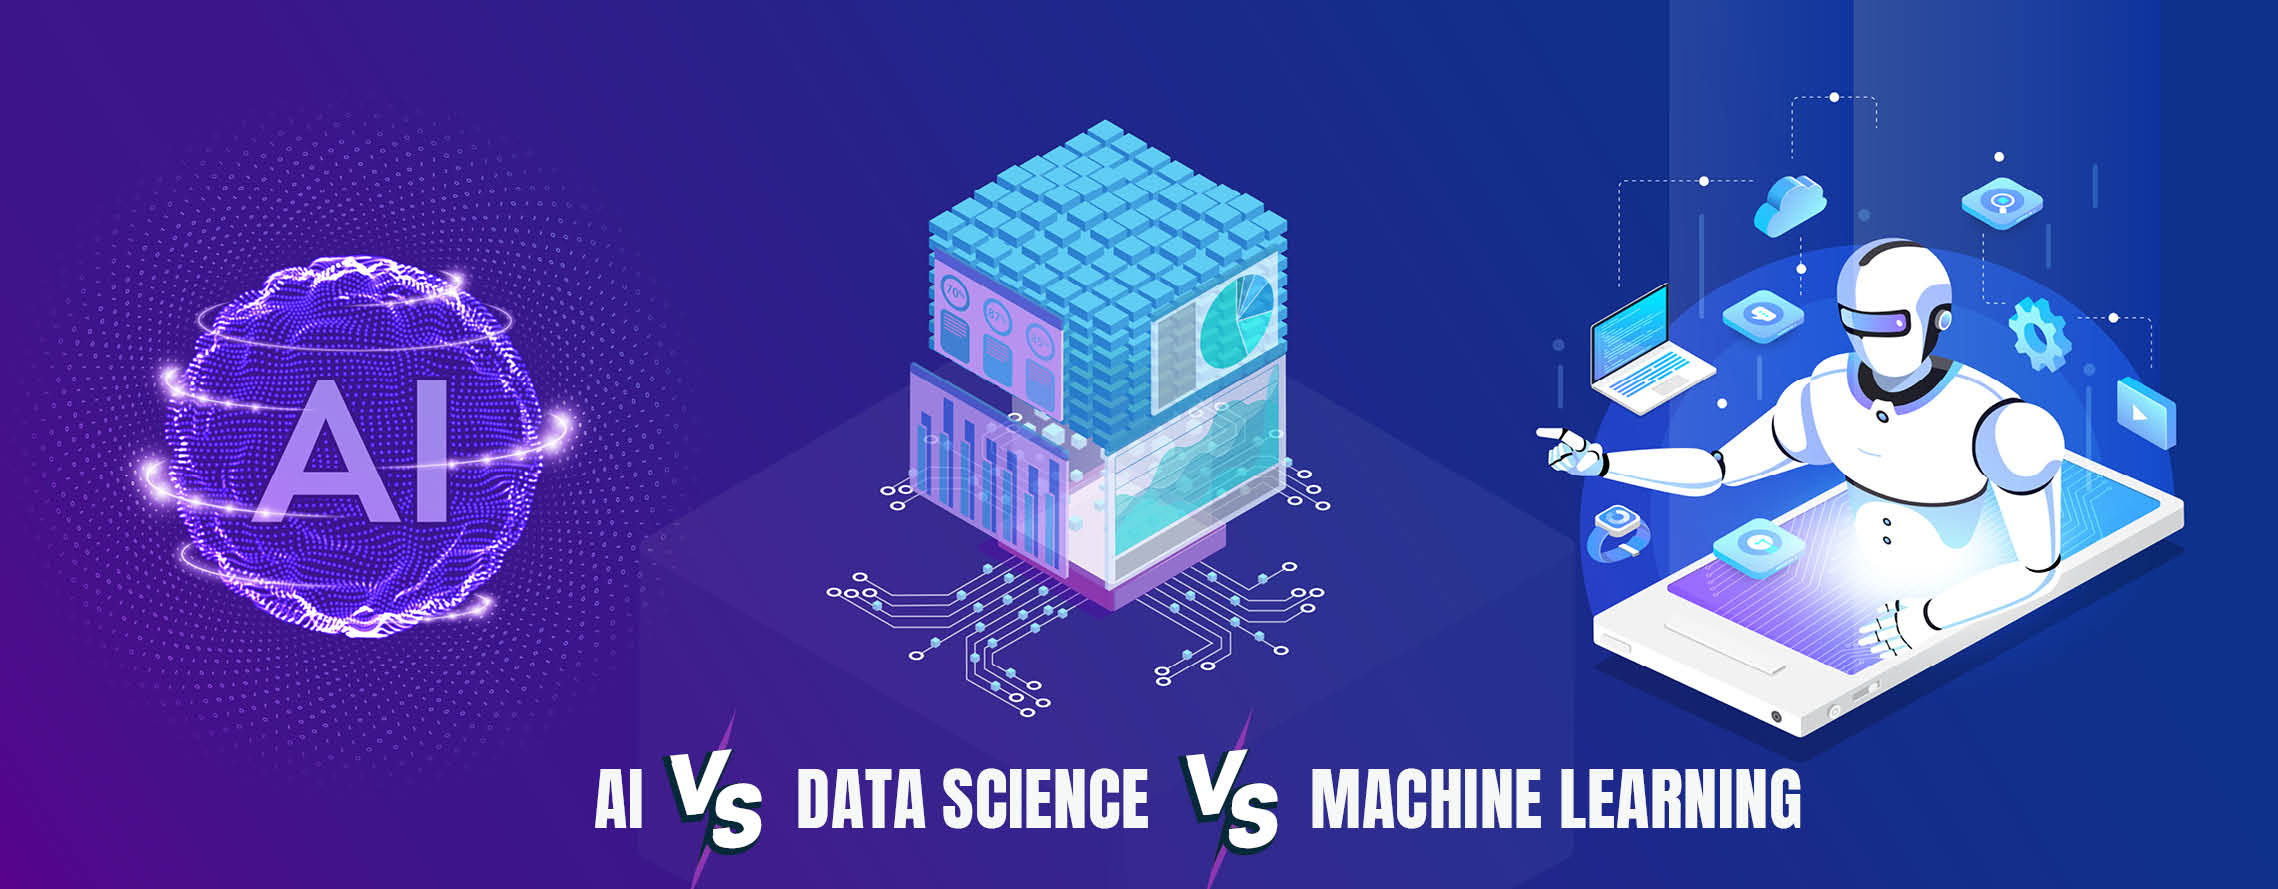 Artificial Intelligence vs Data Science vs Machine Learning